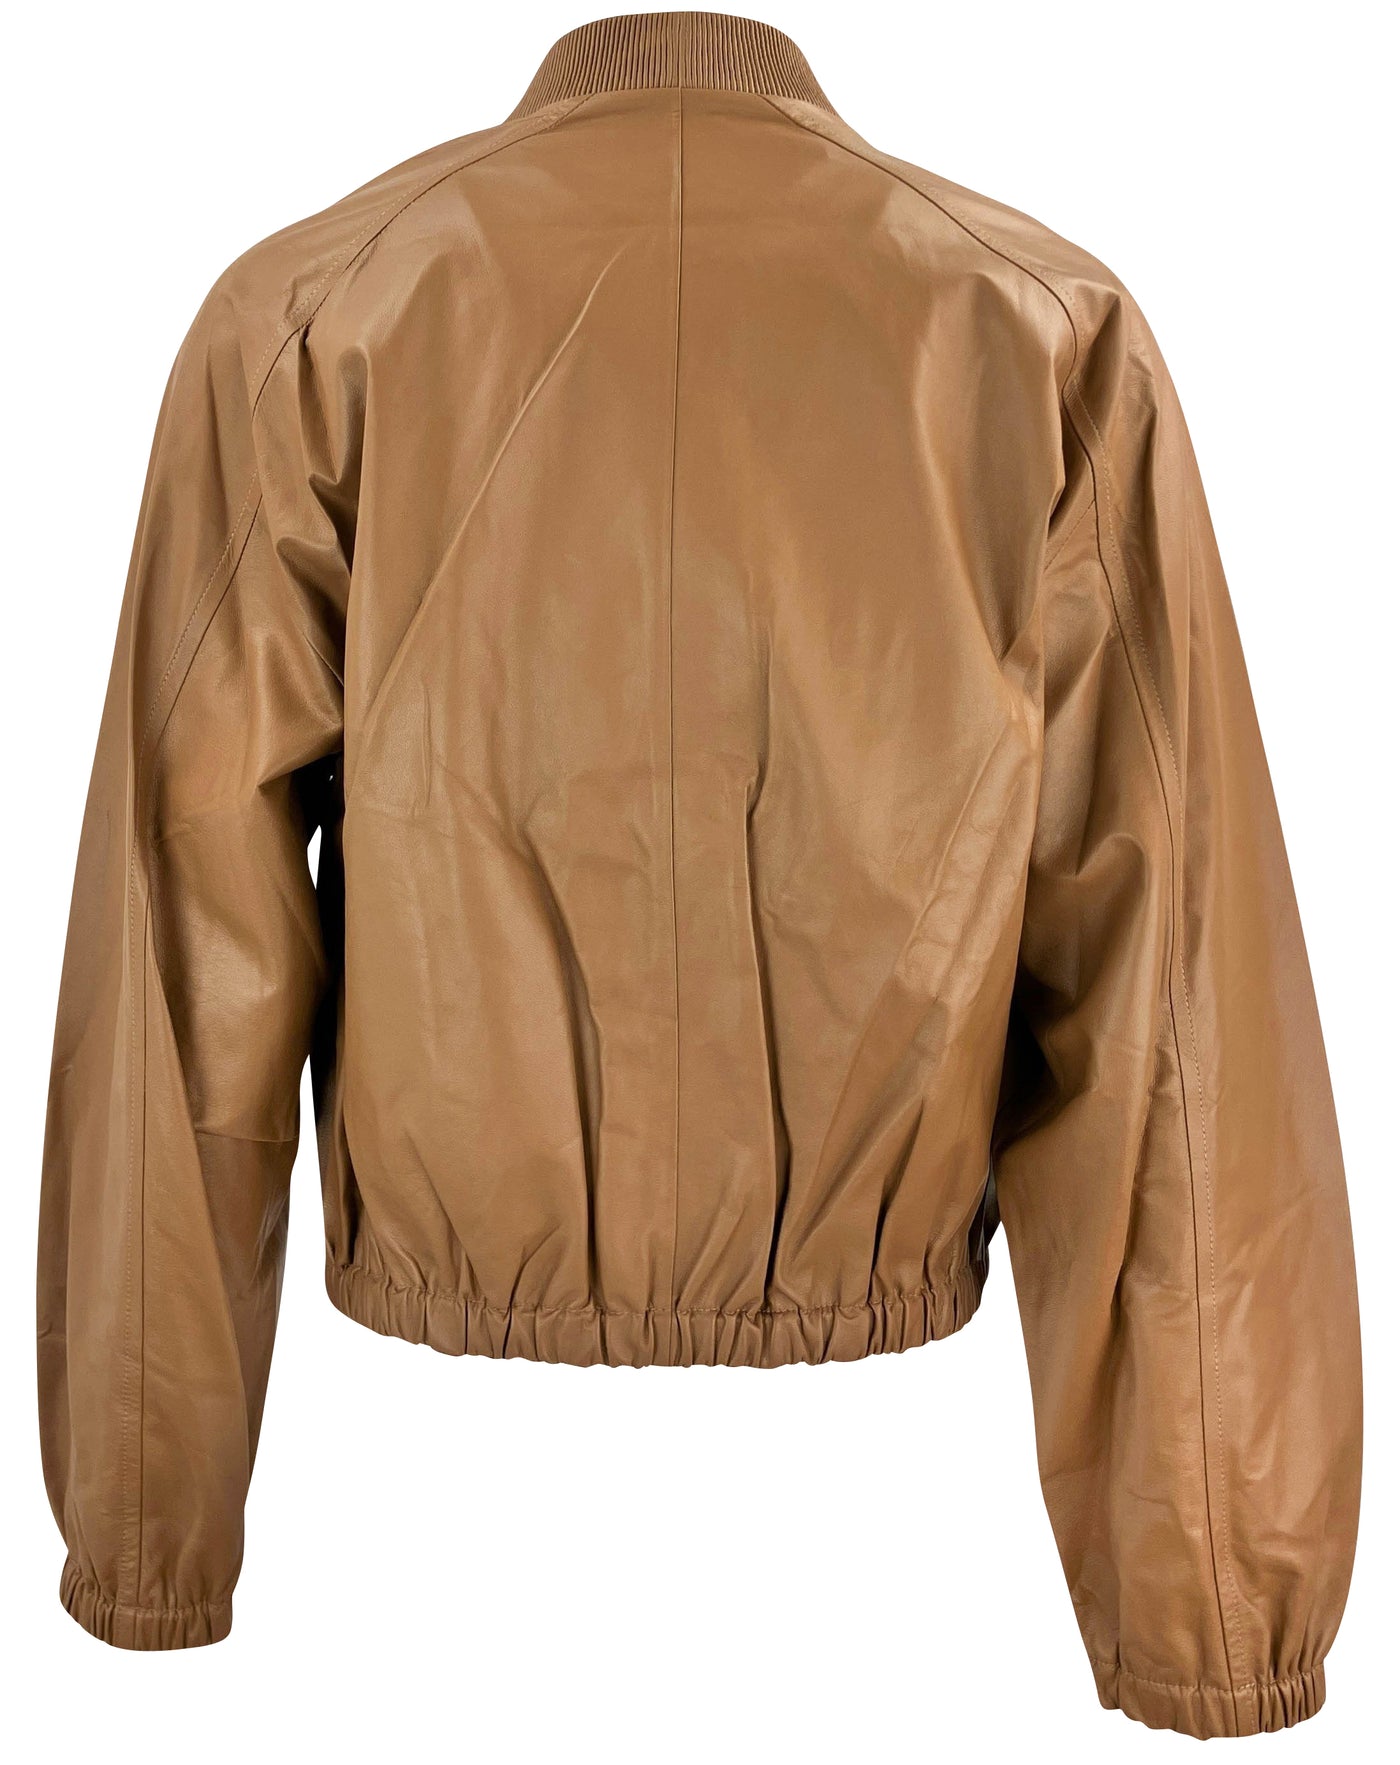 Zeynep Arcay Leather Bomber Jacket in Camel - Discounts on Zeynep Arcay at UAL